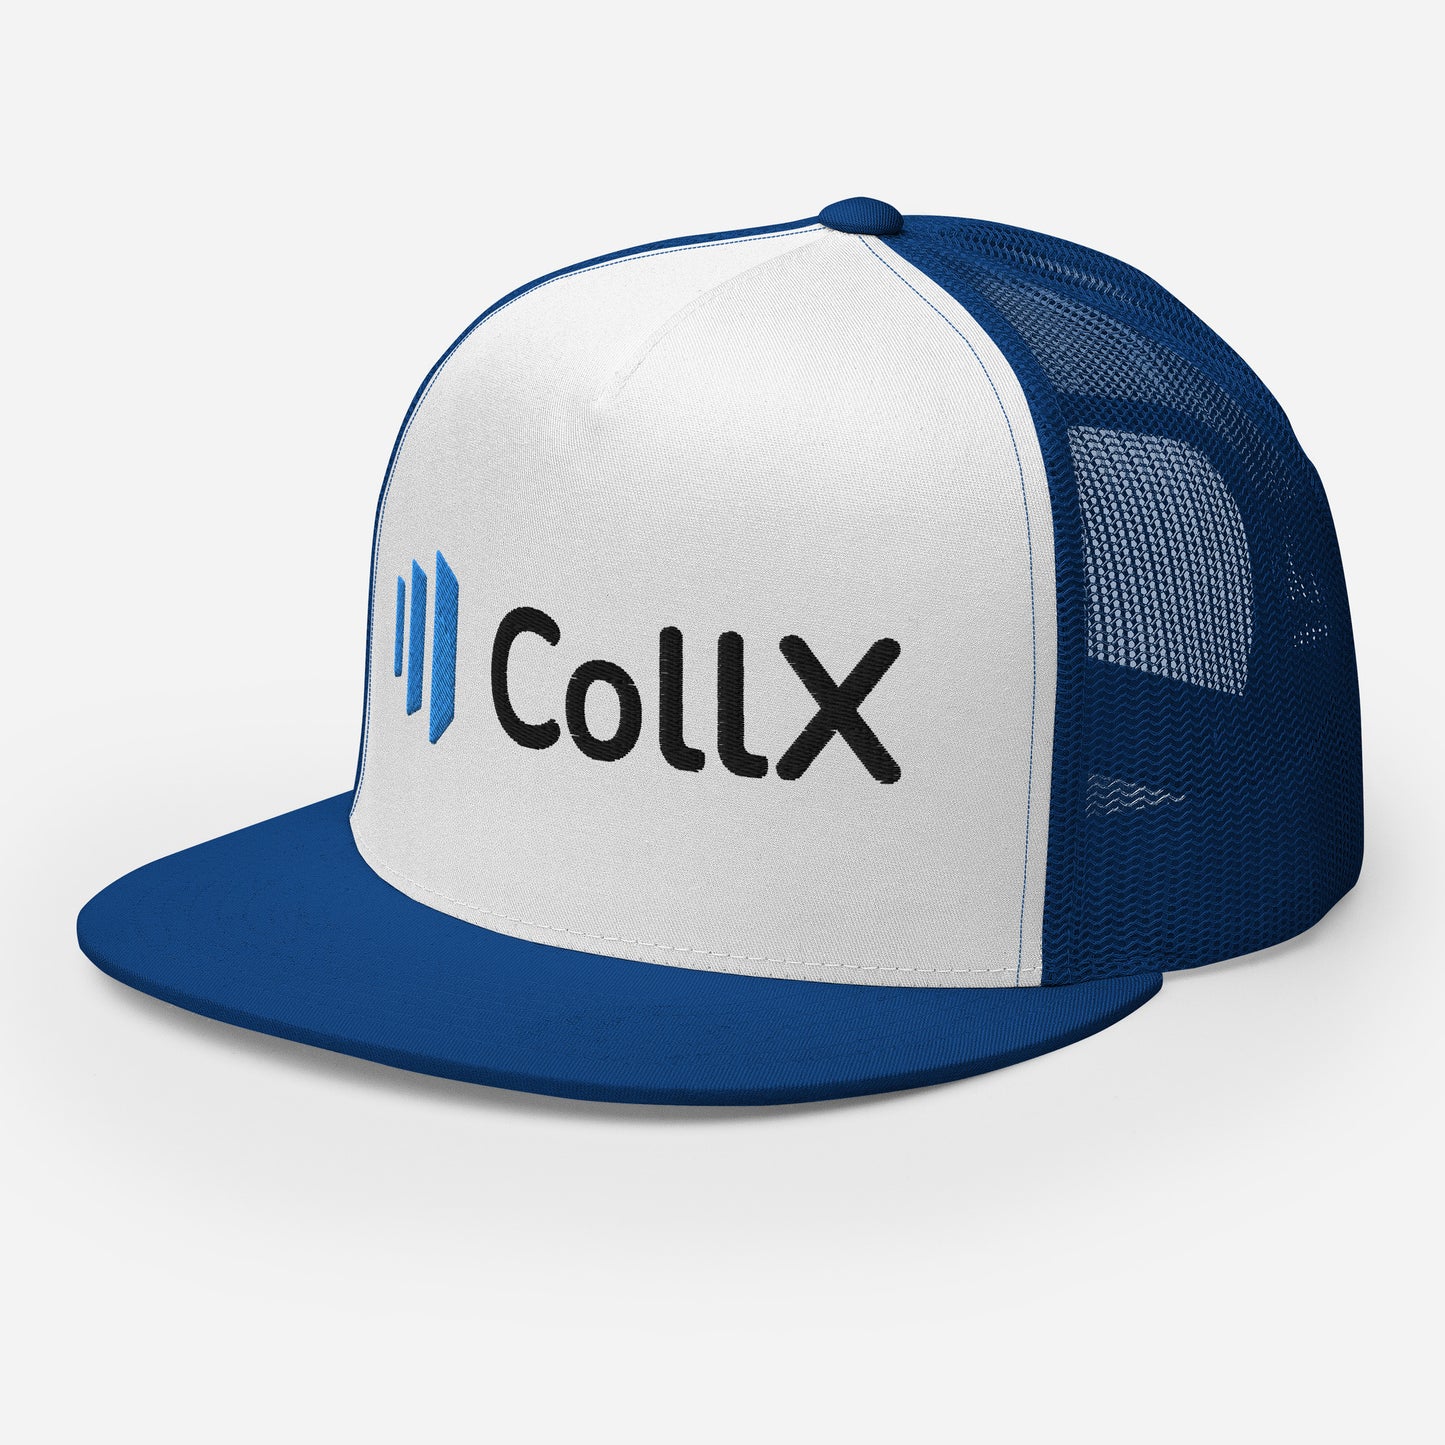 CollX Trucker Cap